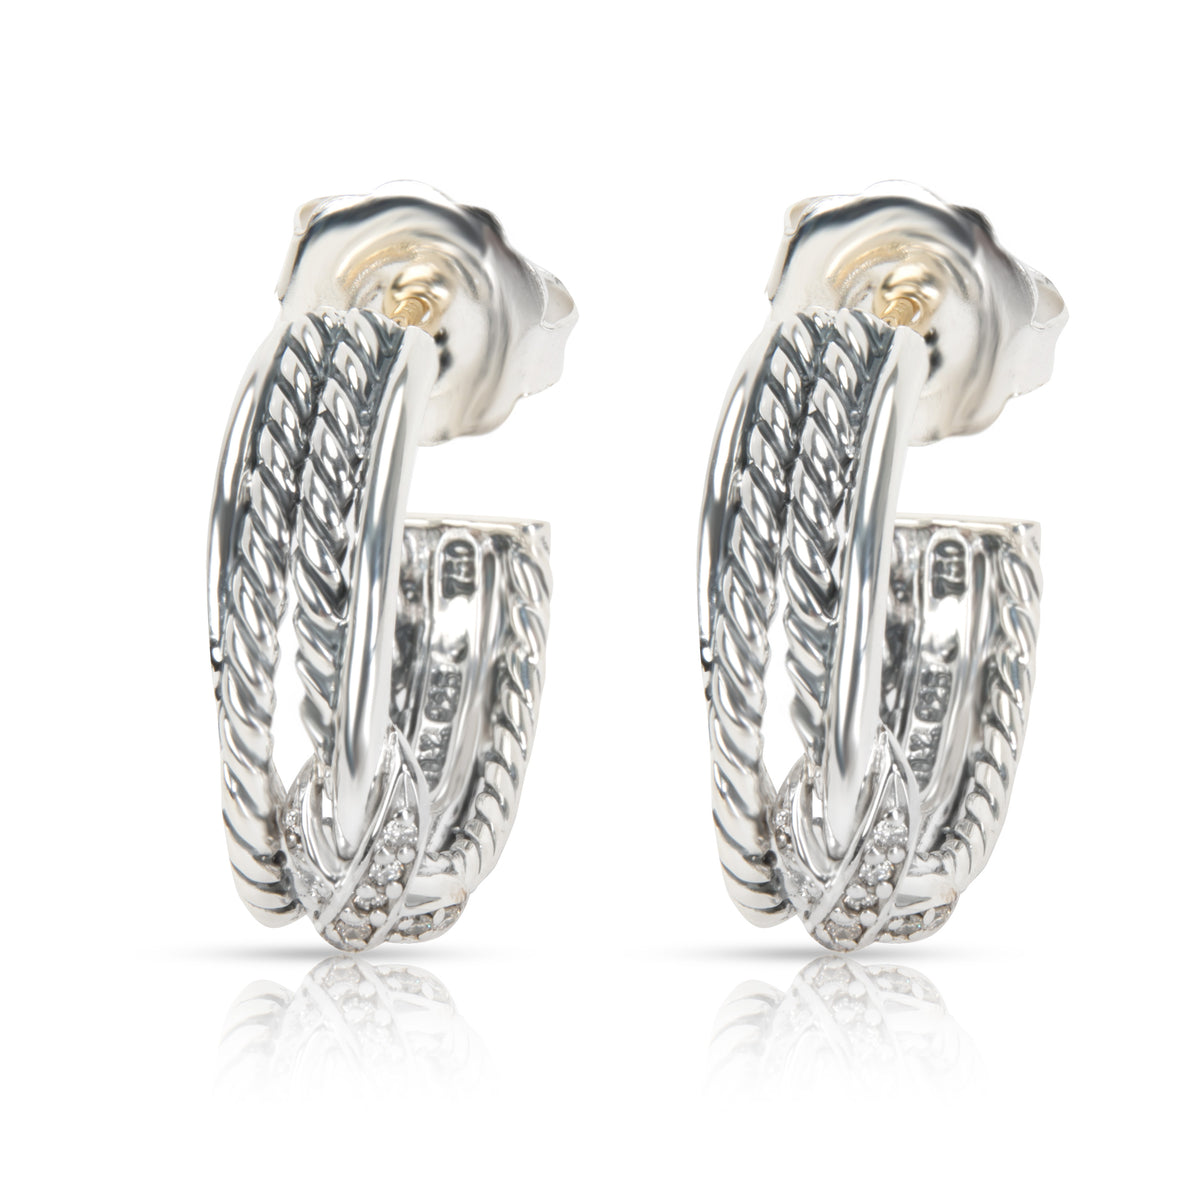 David Yurman Diamond Cable X Hoop Earrings in 18K Yellow Gold & Sterling Silver